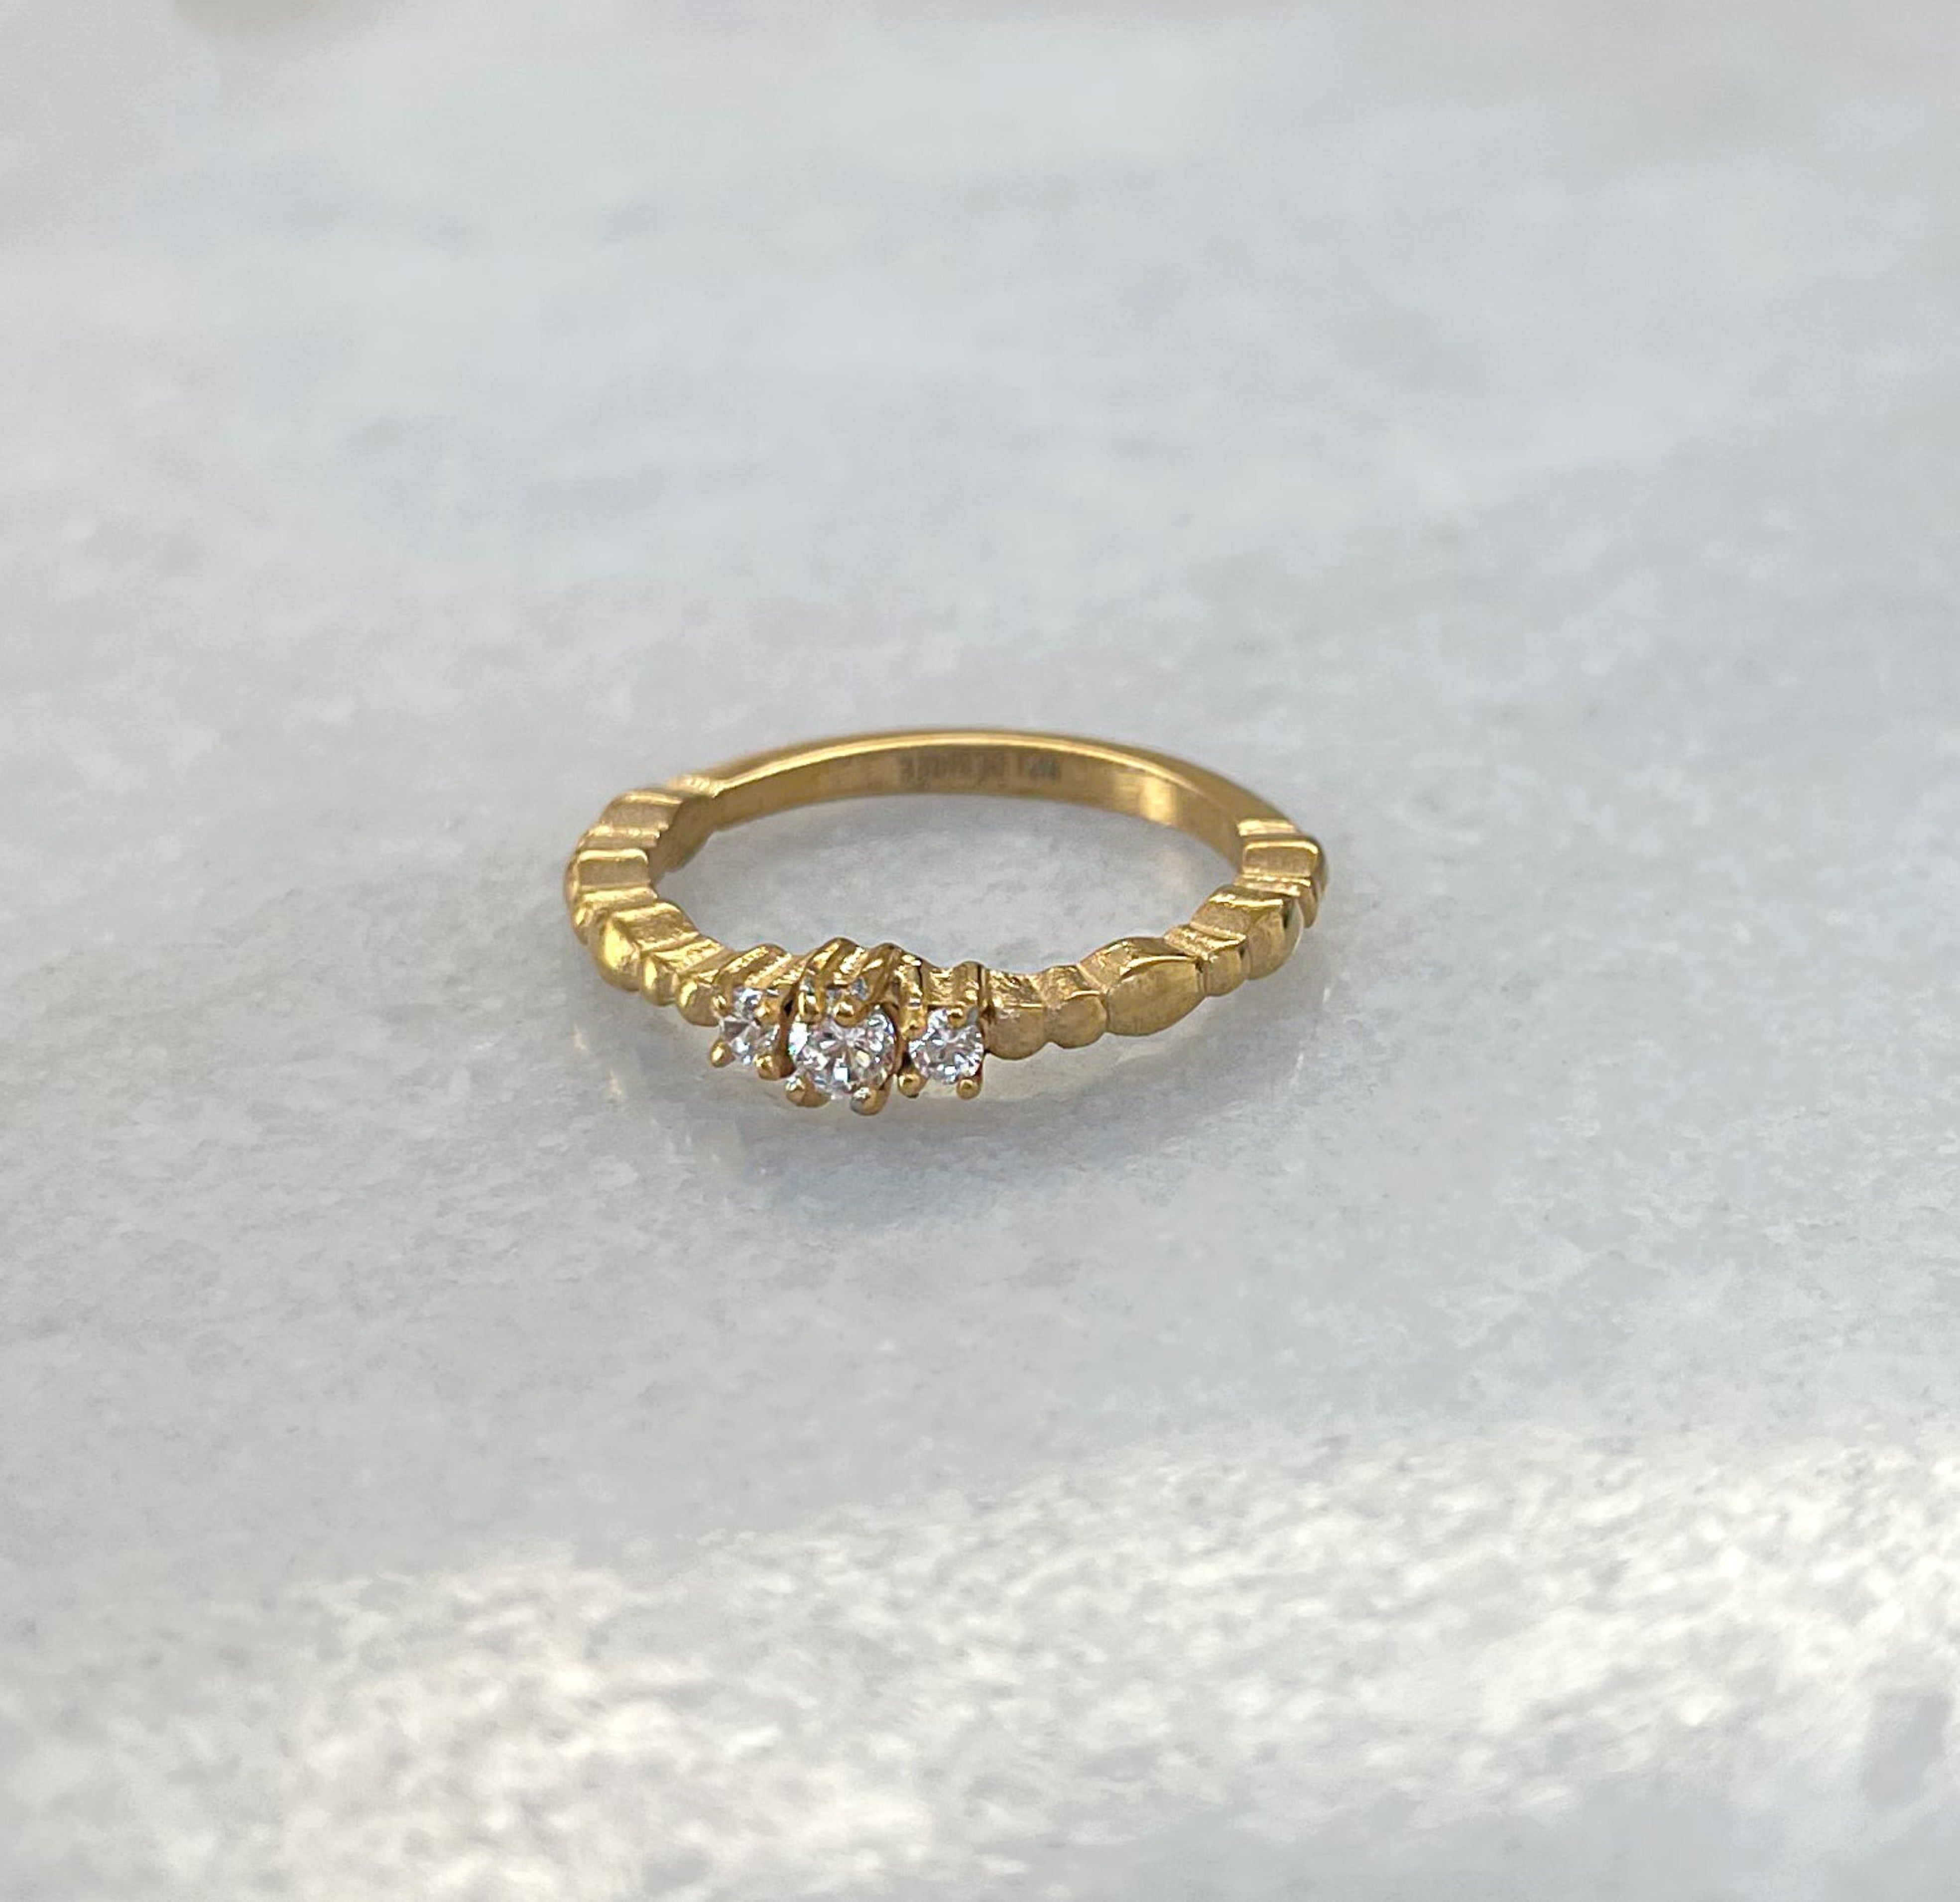 Celeste gold dainty trim stone ring. Waterproof jewelry